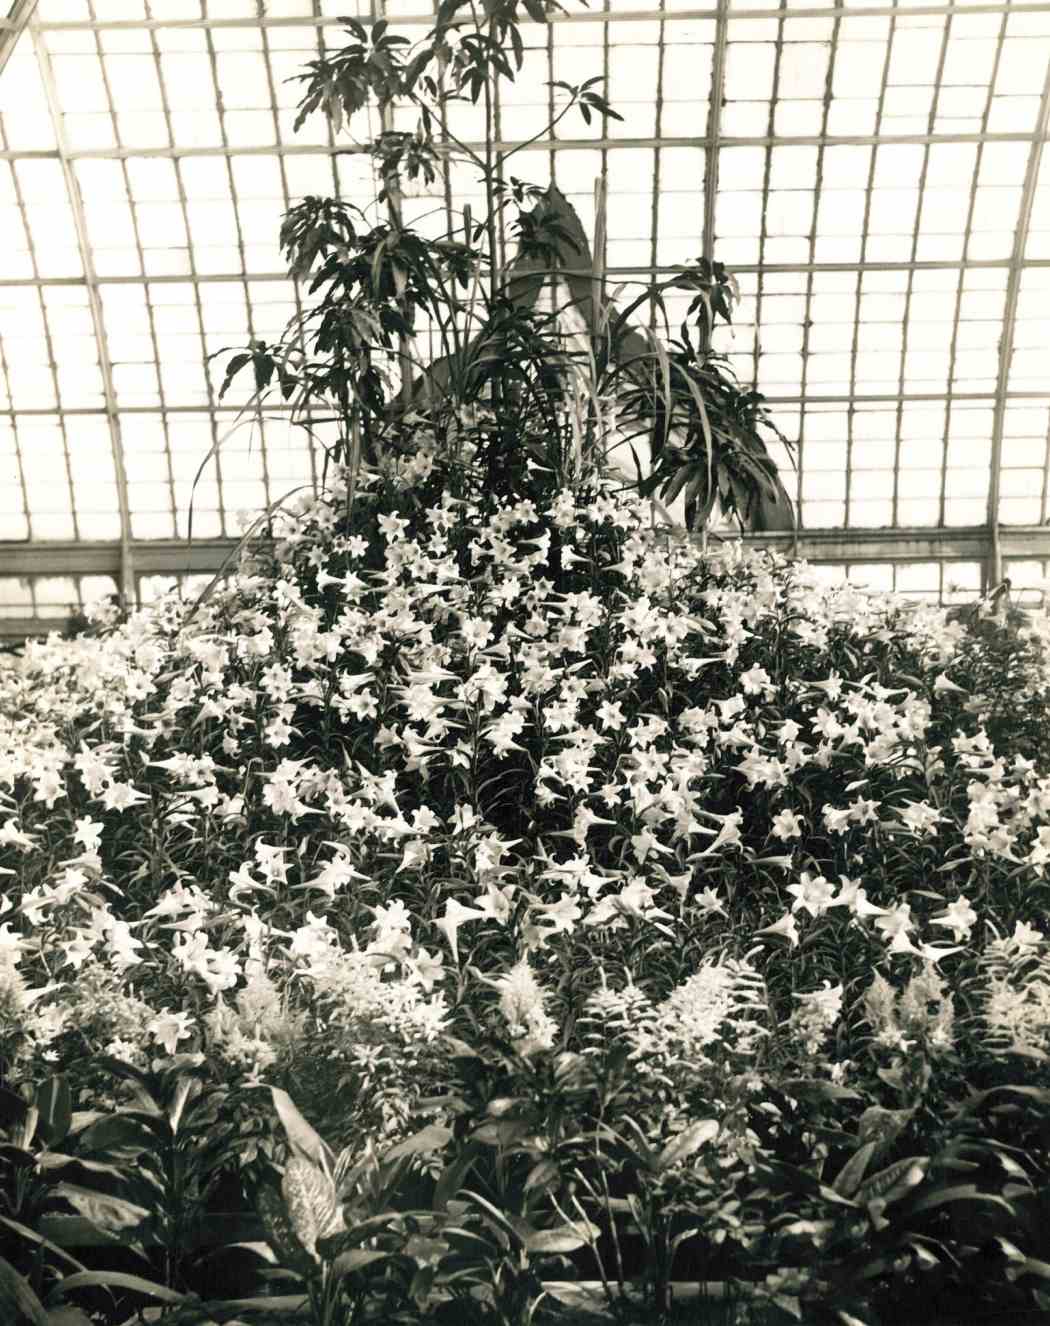 Spring Flower Show 1928